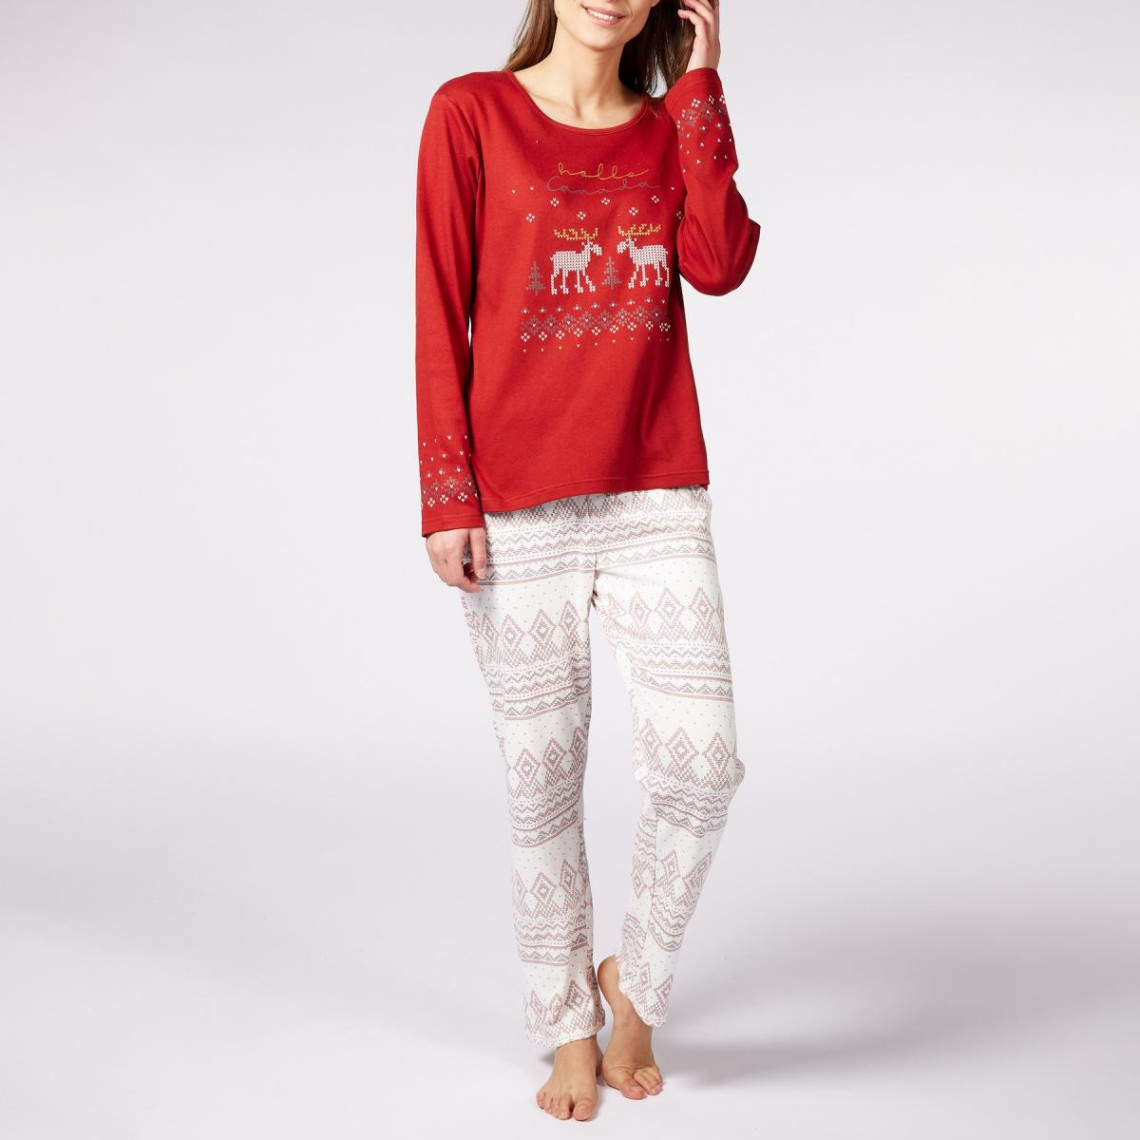 pyjama long femme en coton - rouge - blanc et terra cotta à motifs rennes-noël - dodo homewear